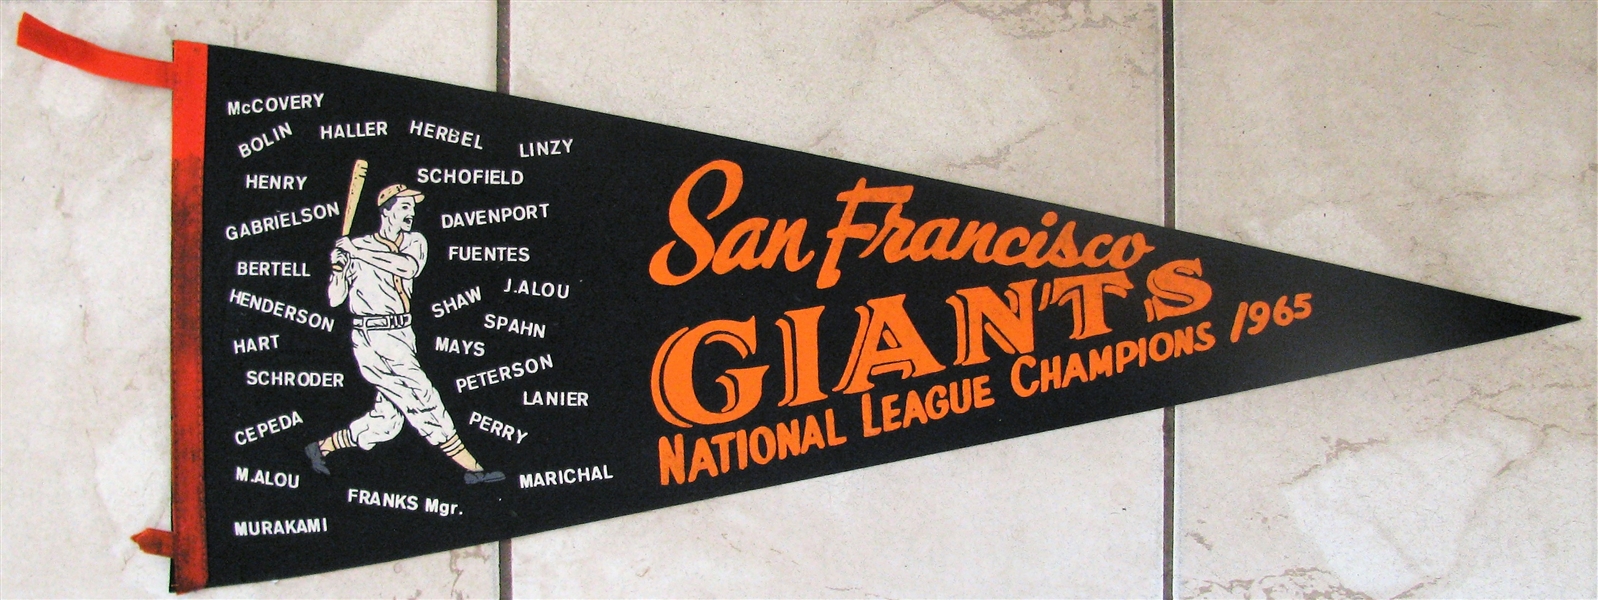 1965 SAN FRANCISCO GIANTS NL CHAMPIONS PHANTOM PENNANT